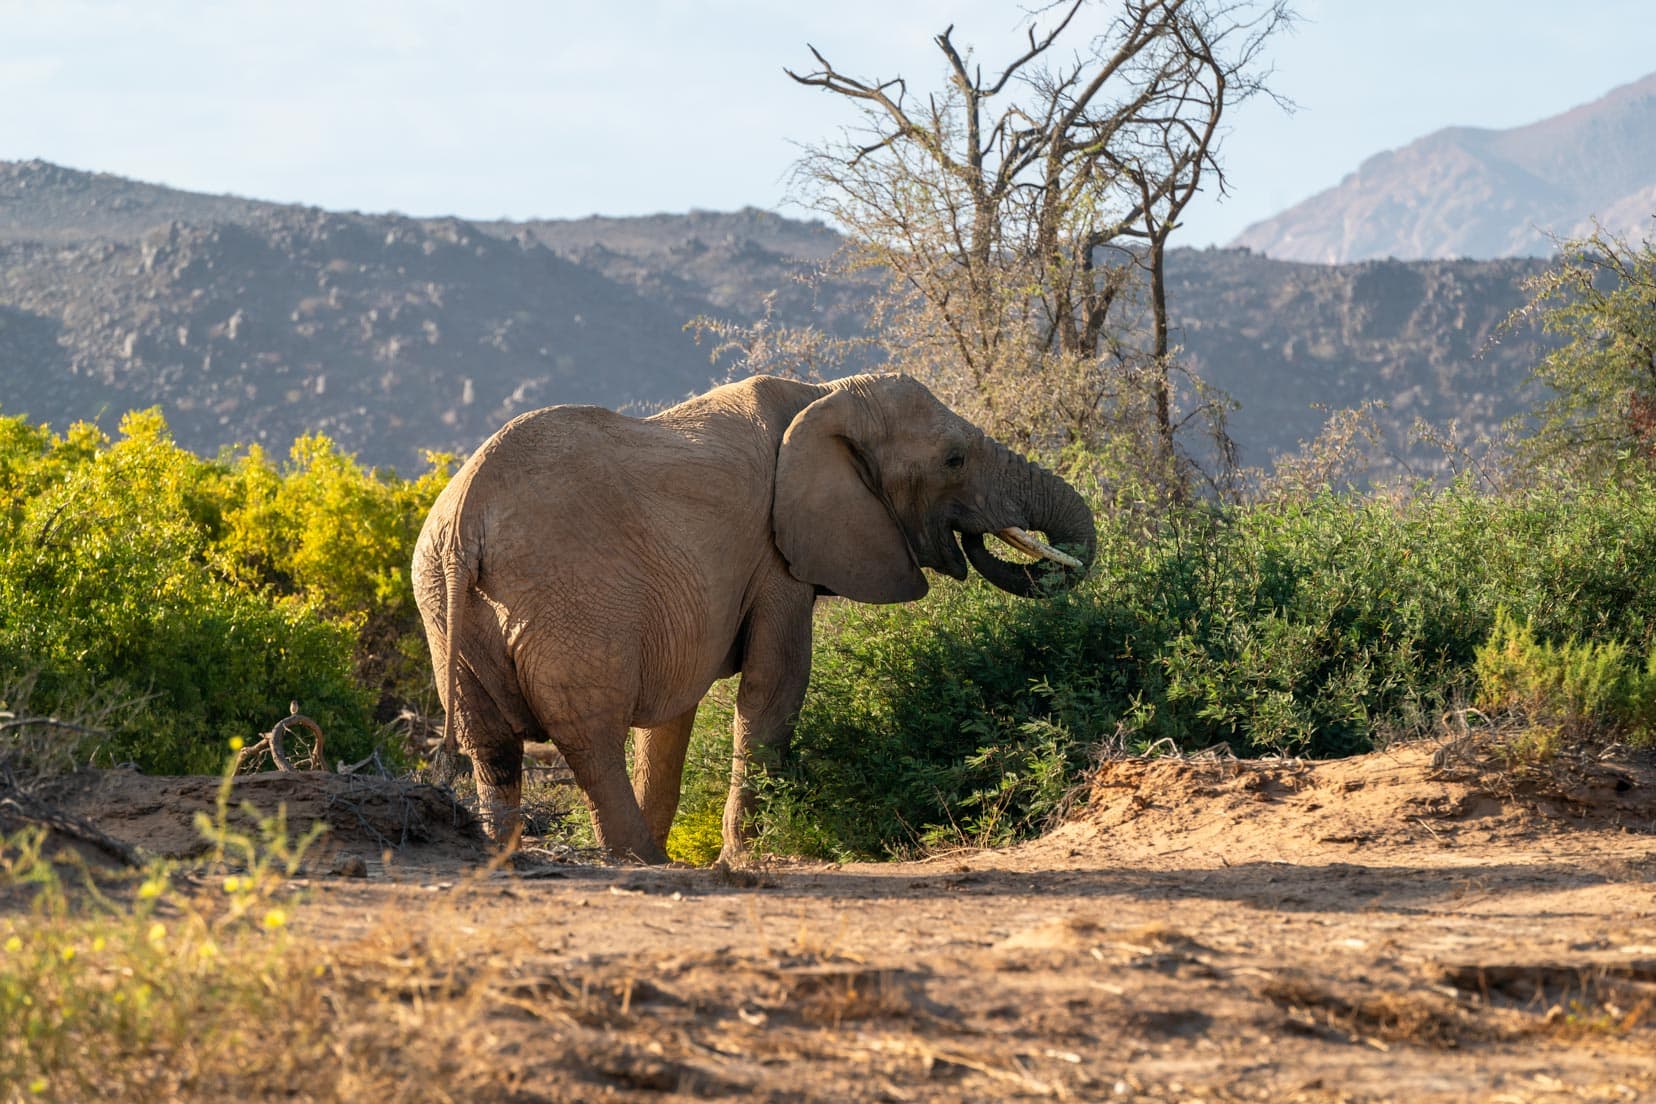 Huab-river-elephant eating bushes near the dry river,-Namibia